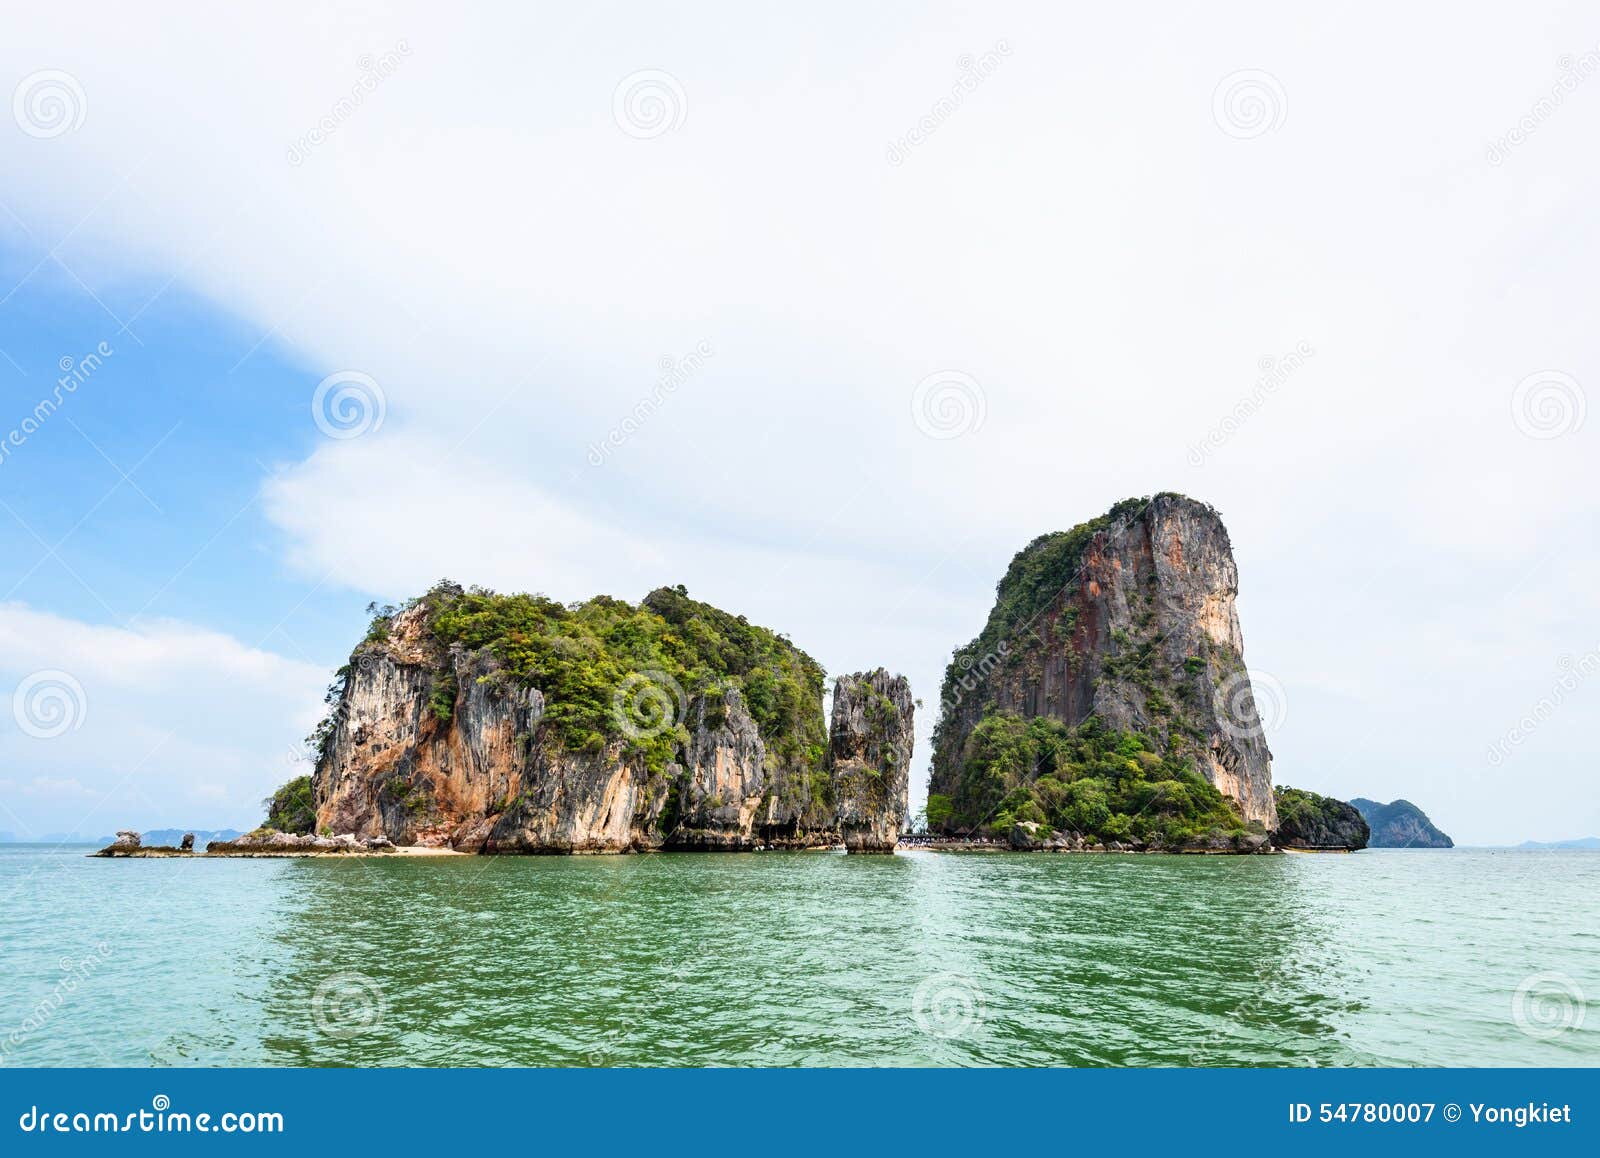 Landscape KhaoTapu or James Bond Island Stock Image - Image of green